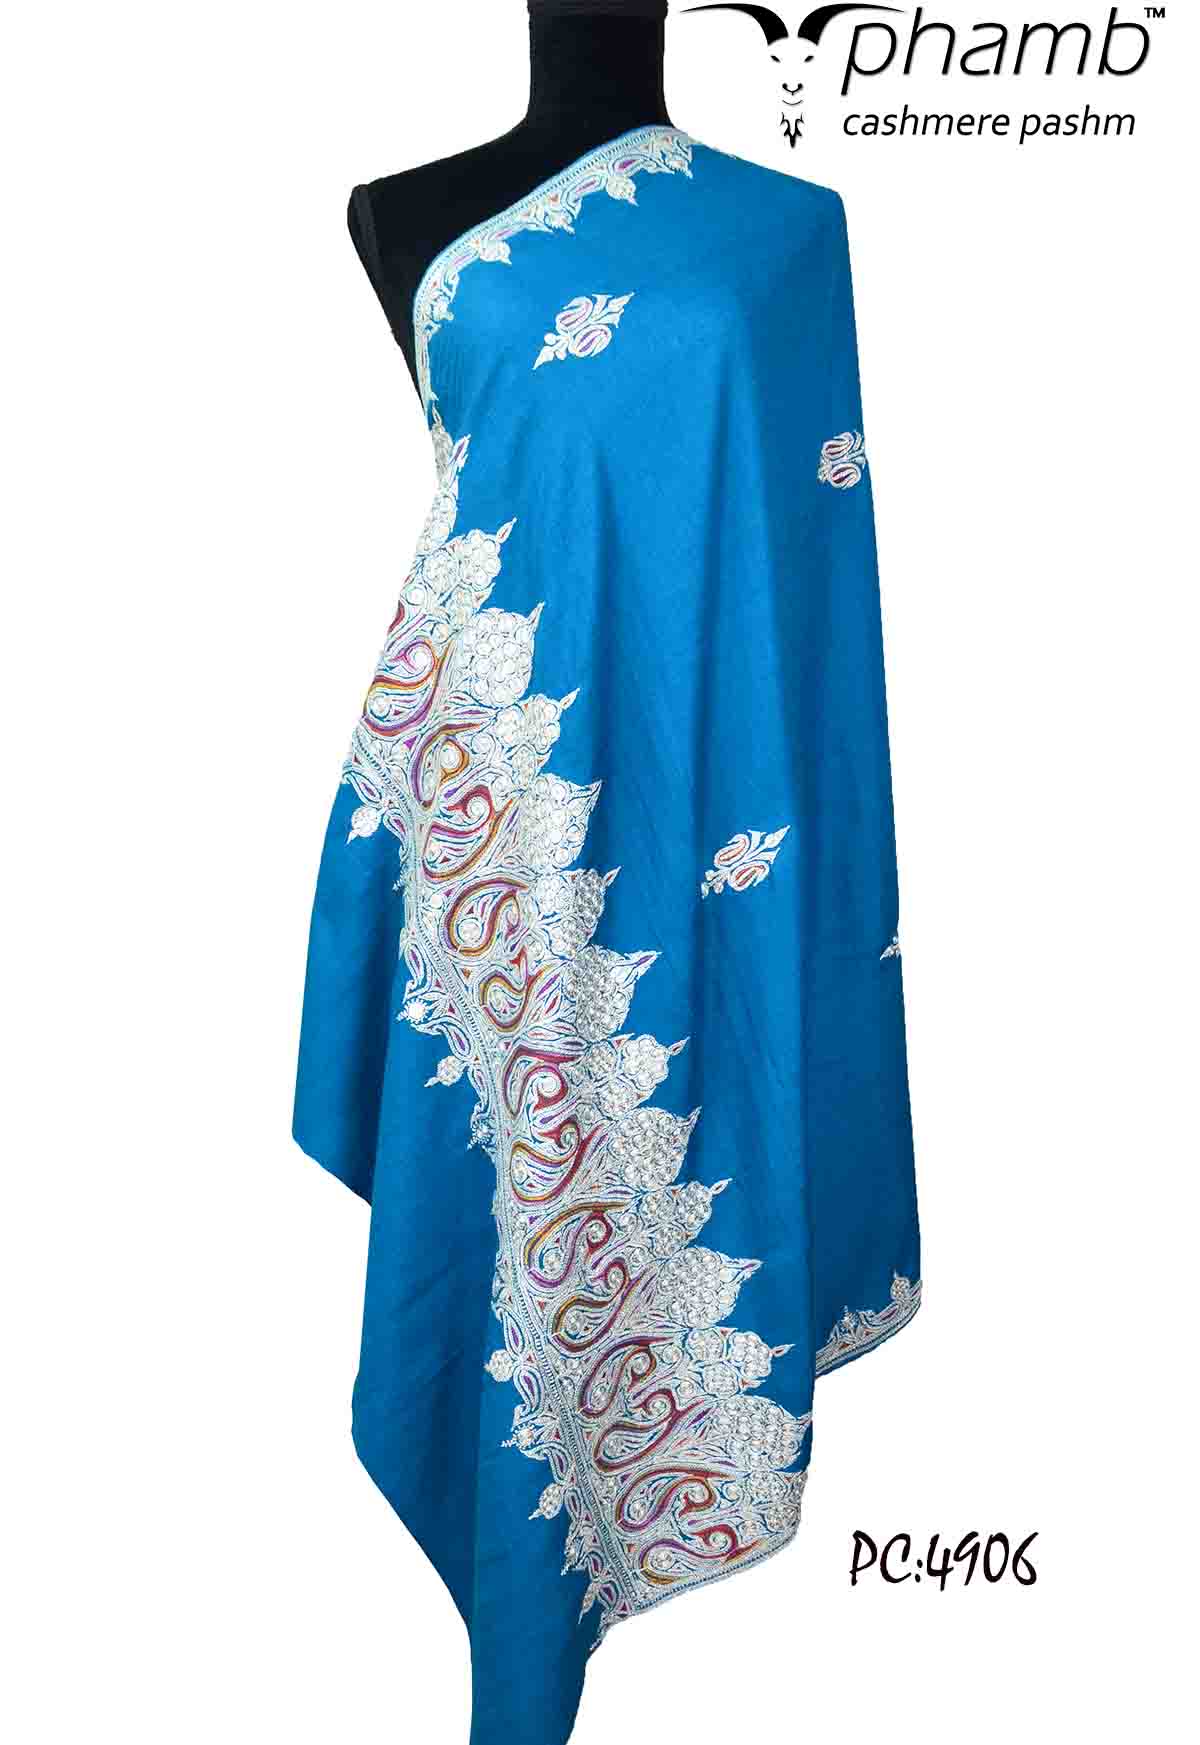 Blue tilla shawl - 4906